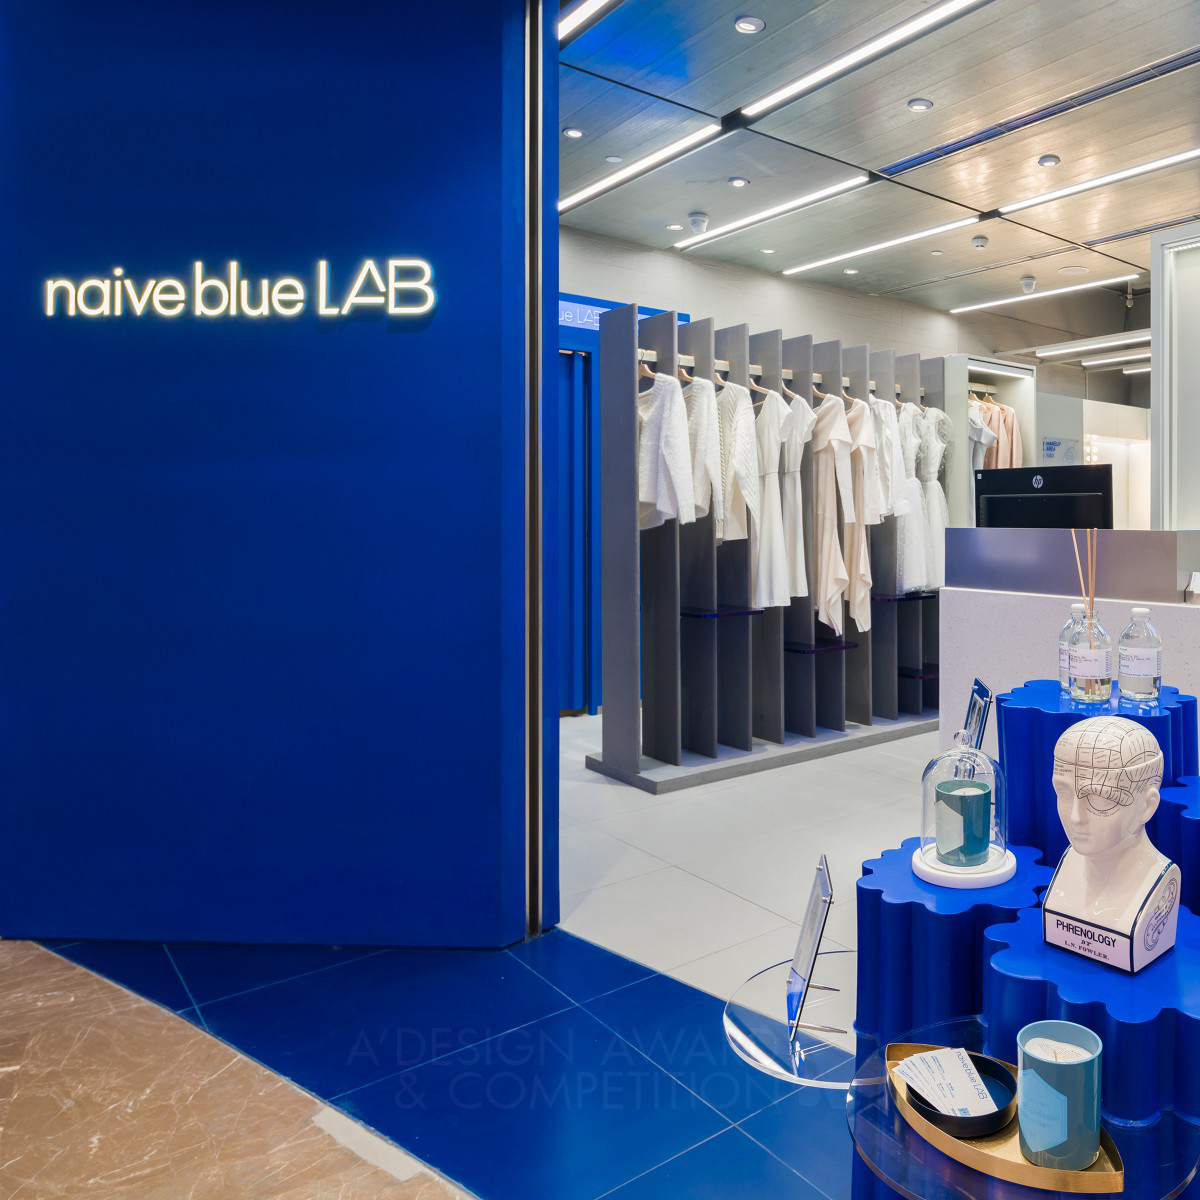 Naive Blue Lab